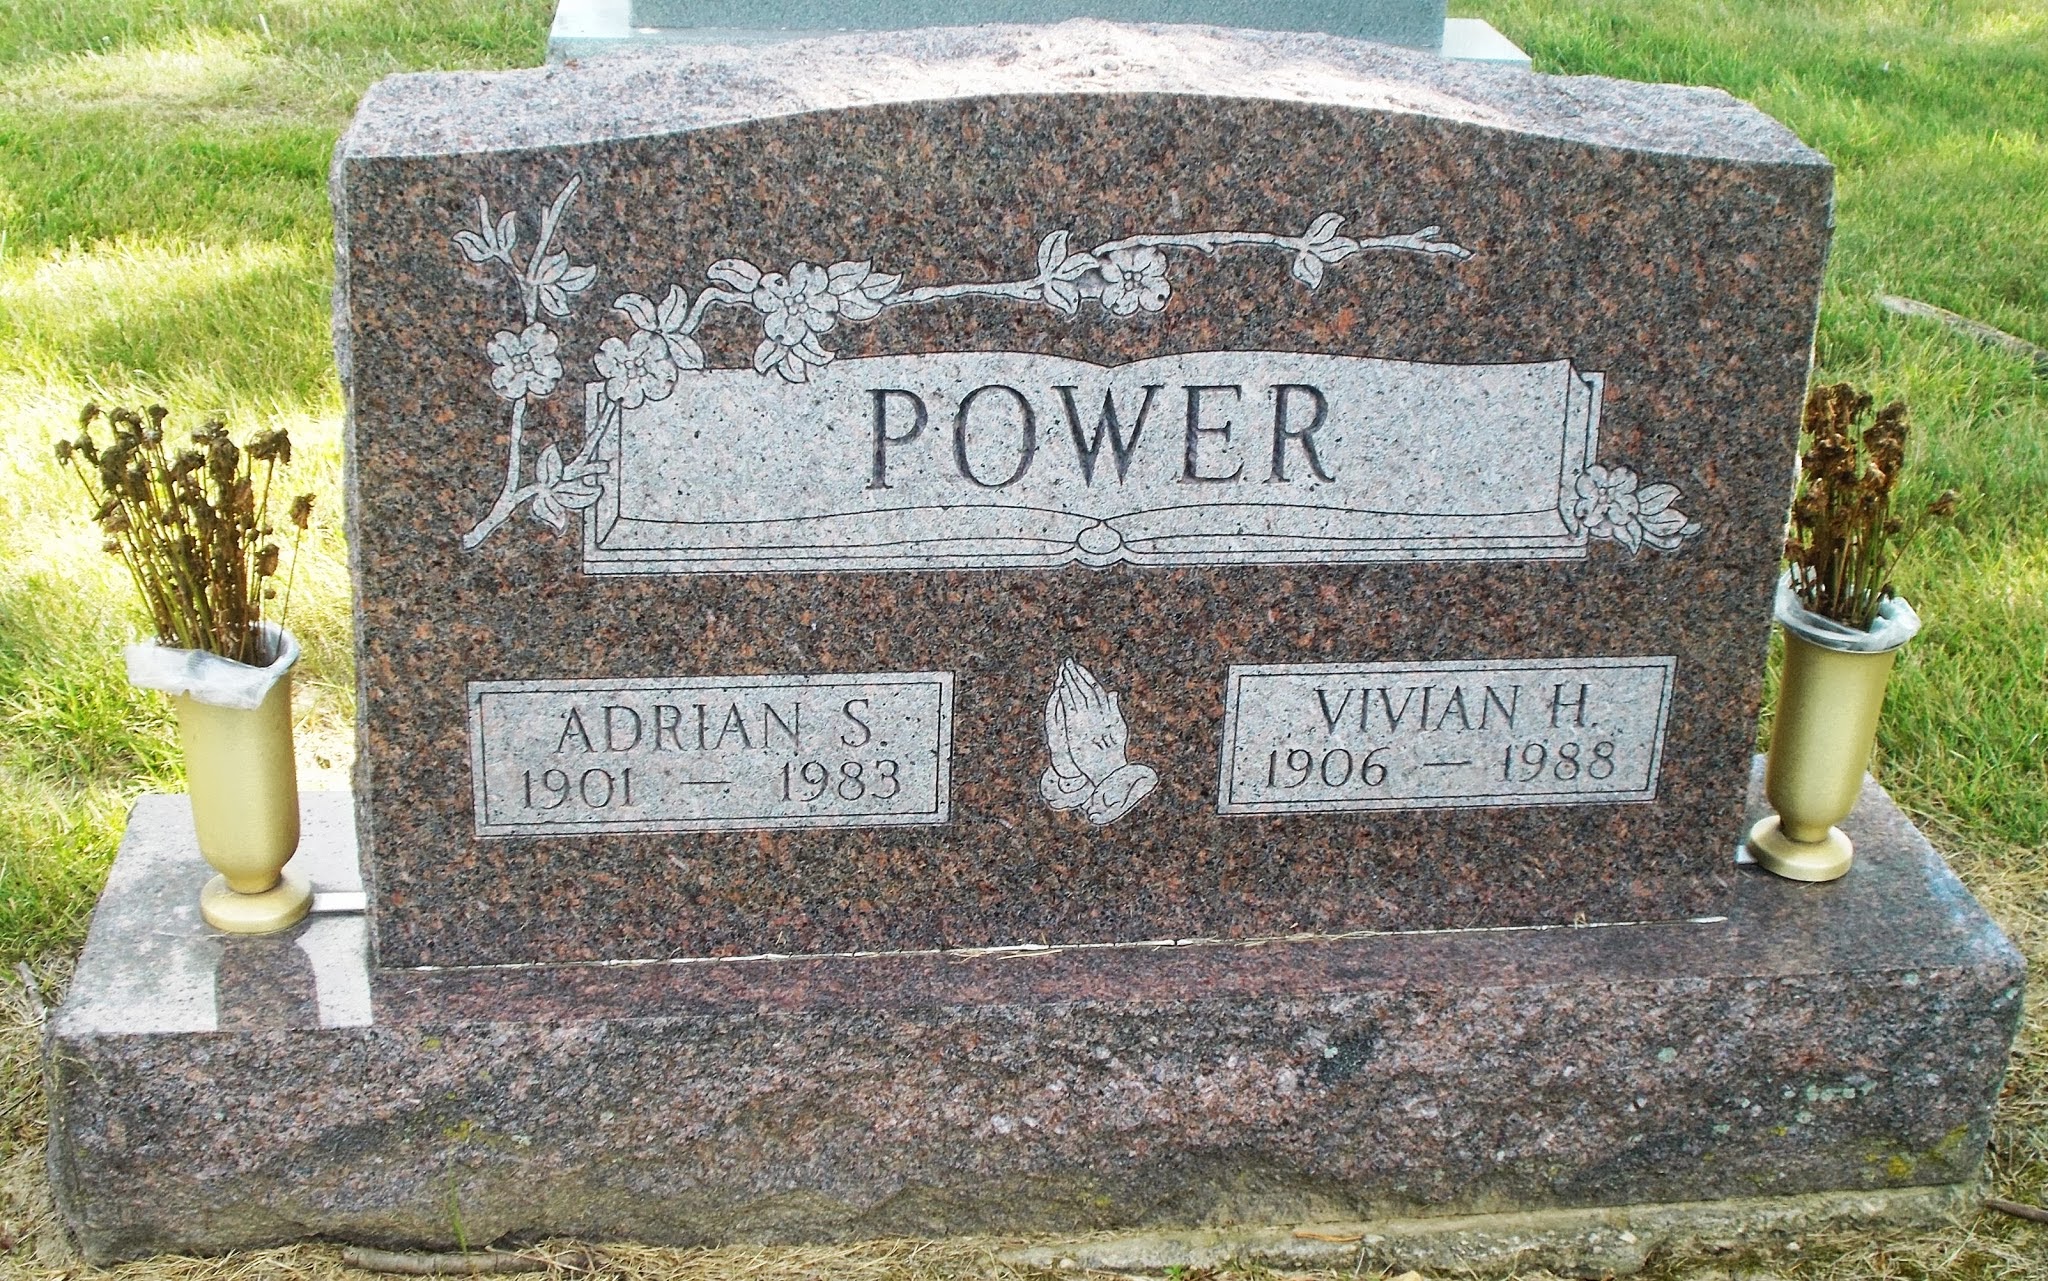 Vivian H Power